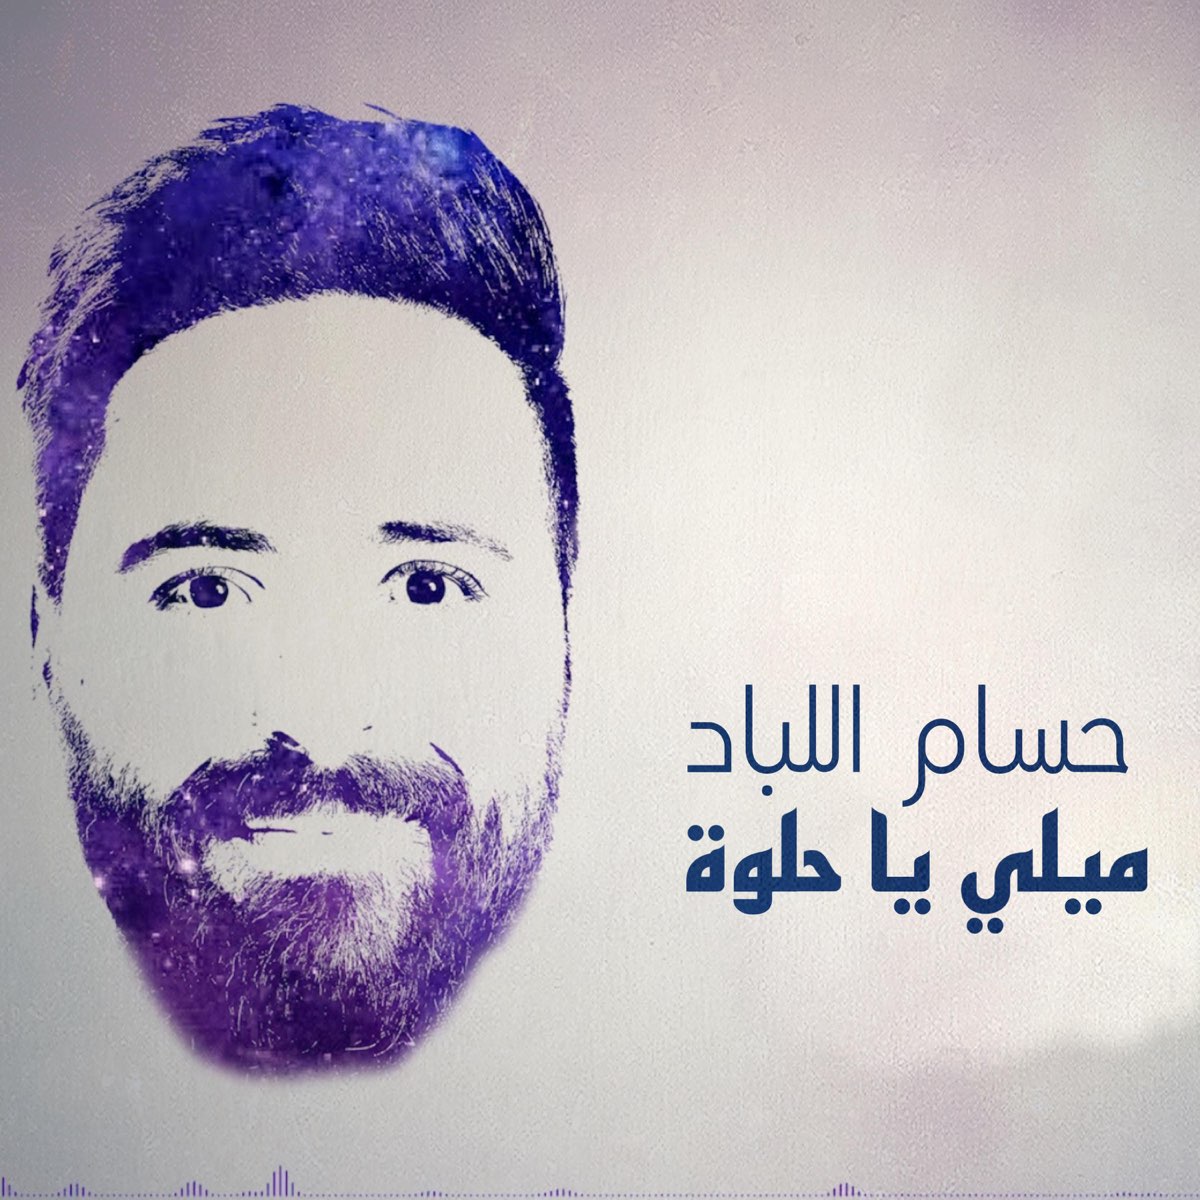 ميلي يا حلوة - Single - Album by Hussam Allabad - Apple Music